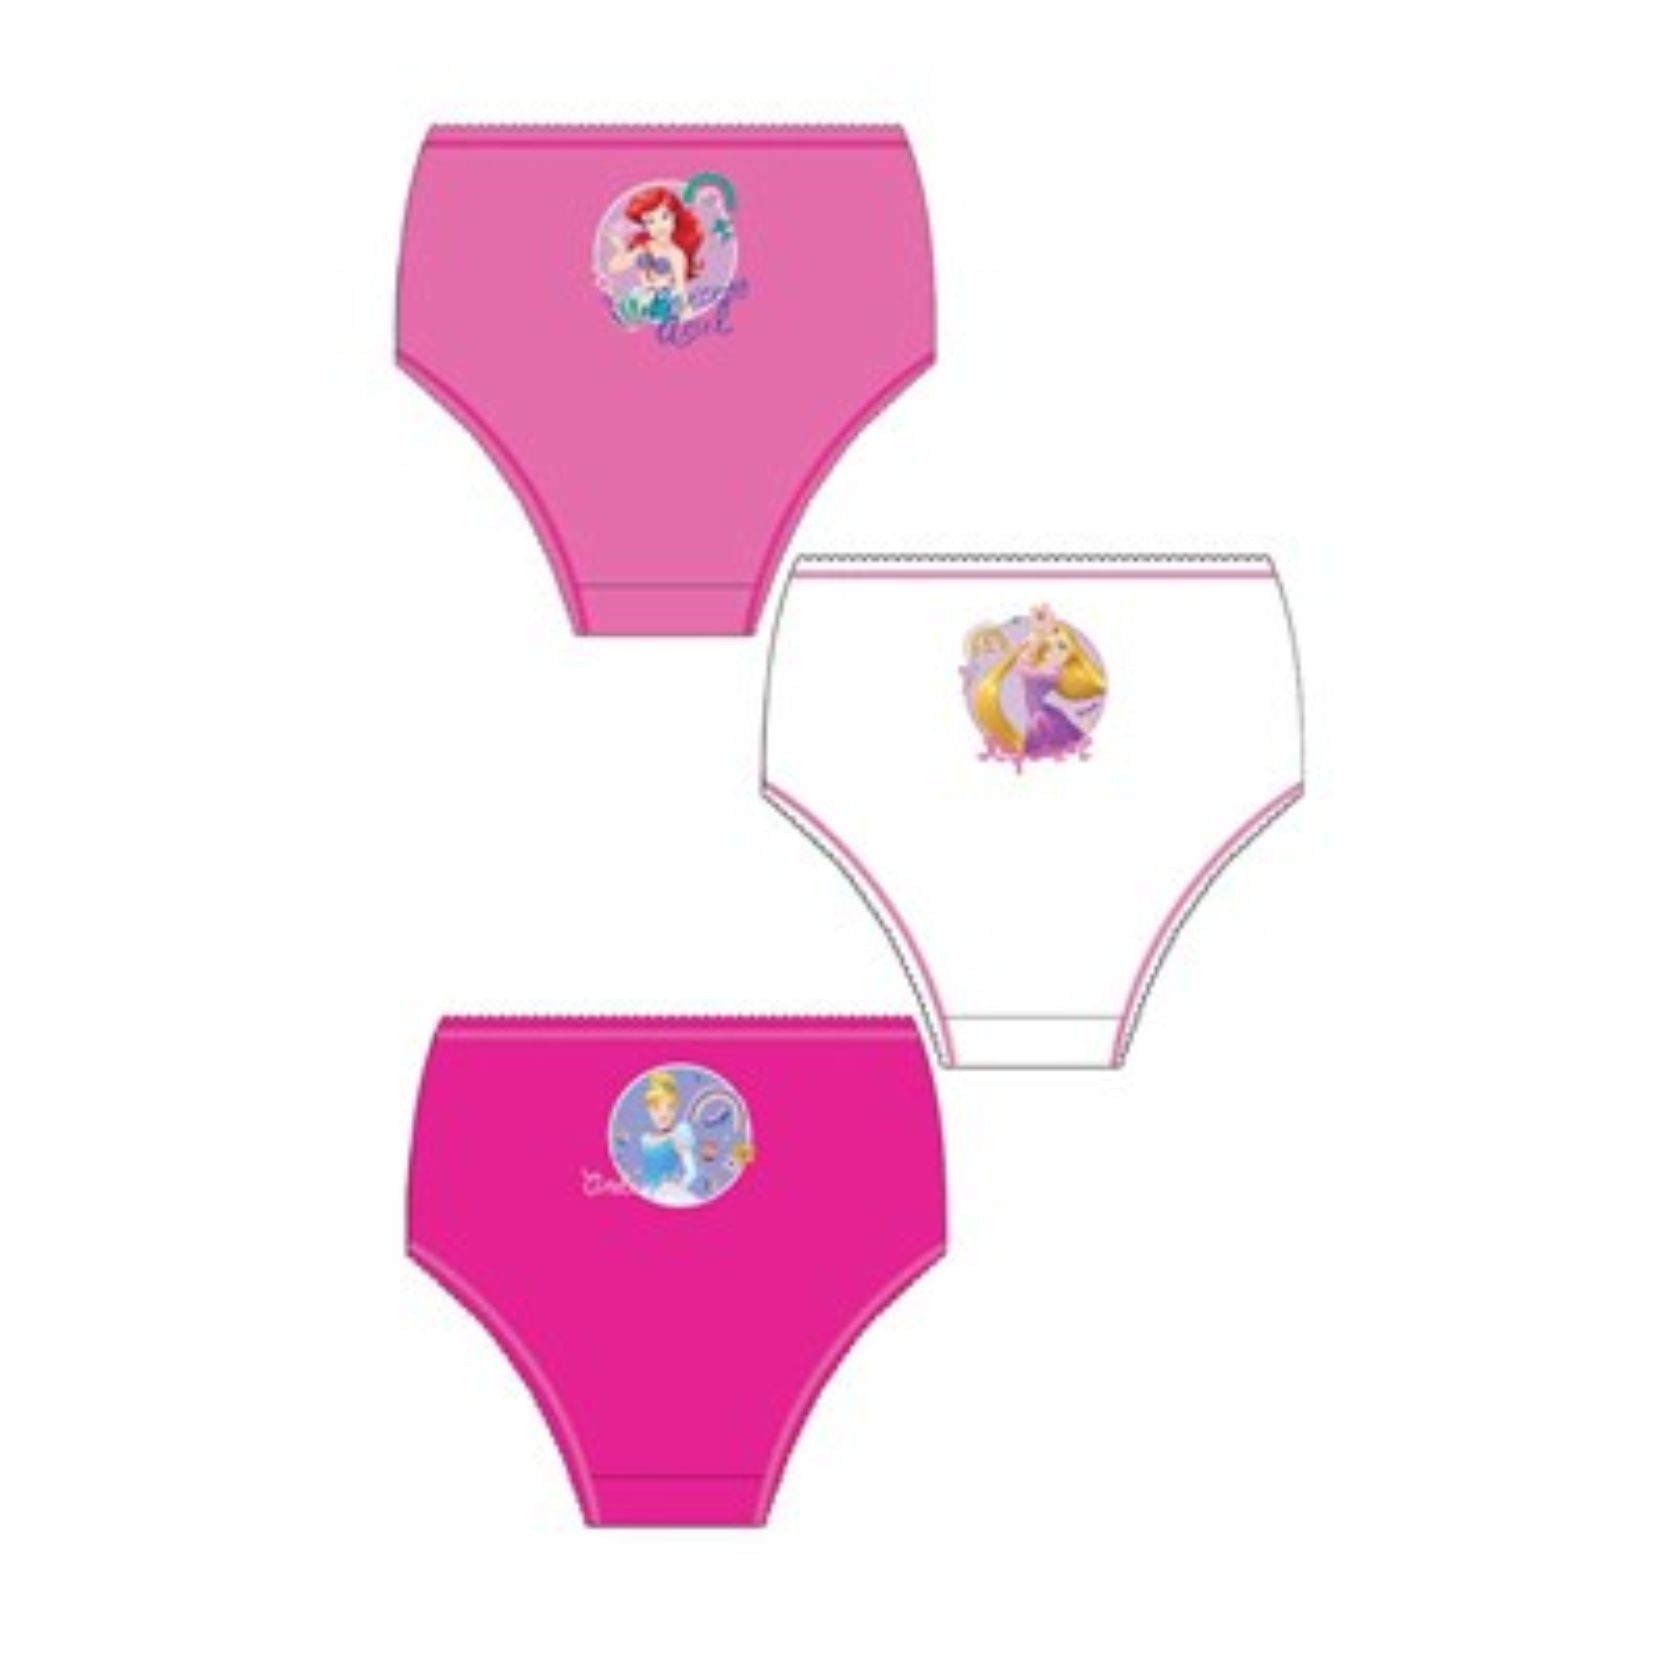 3 x Girls Character Knickers Kids Disney Underwear Briefs Age 1 - 8 Years